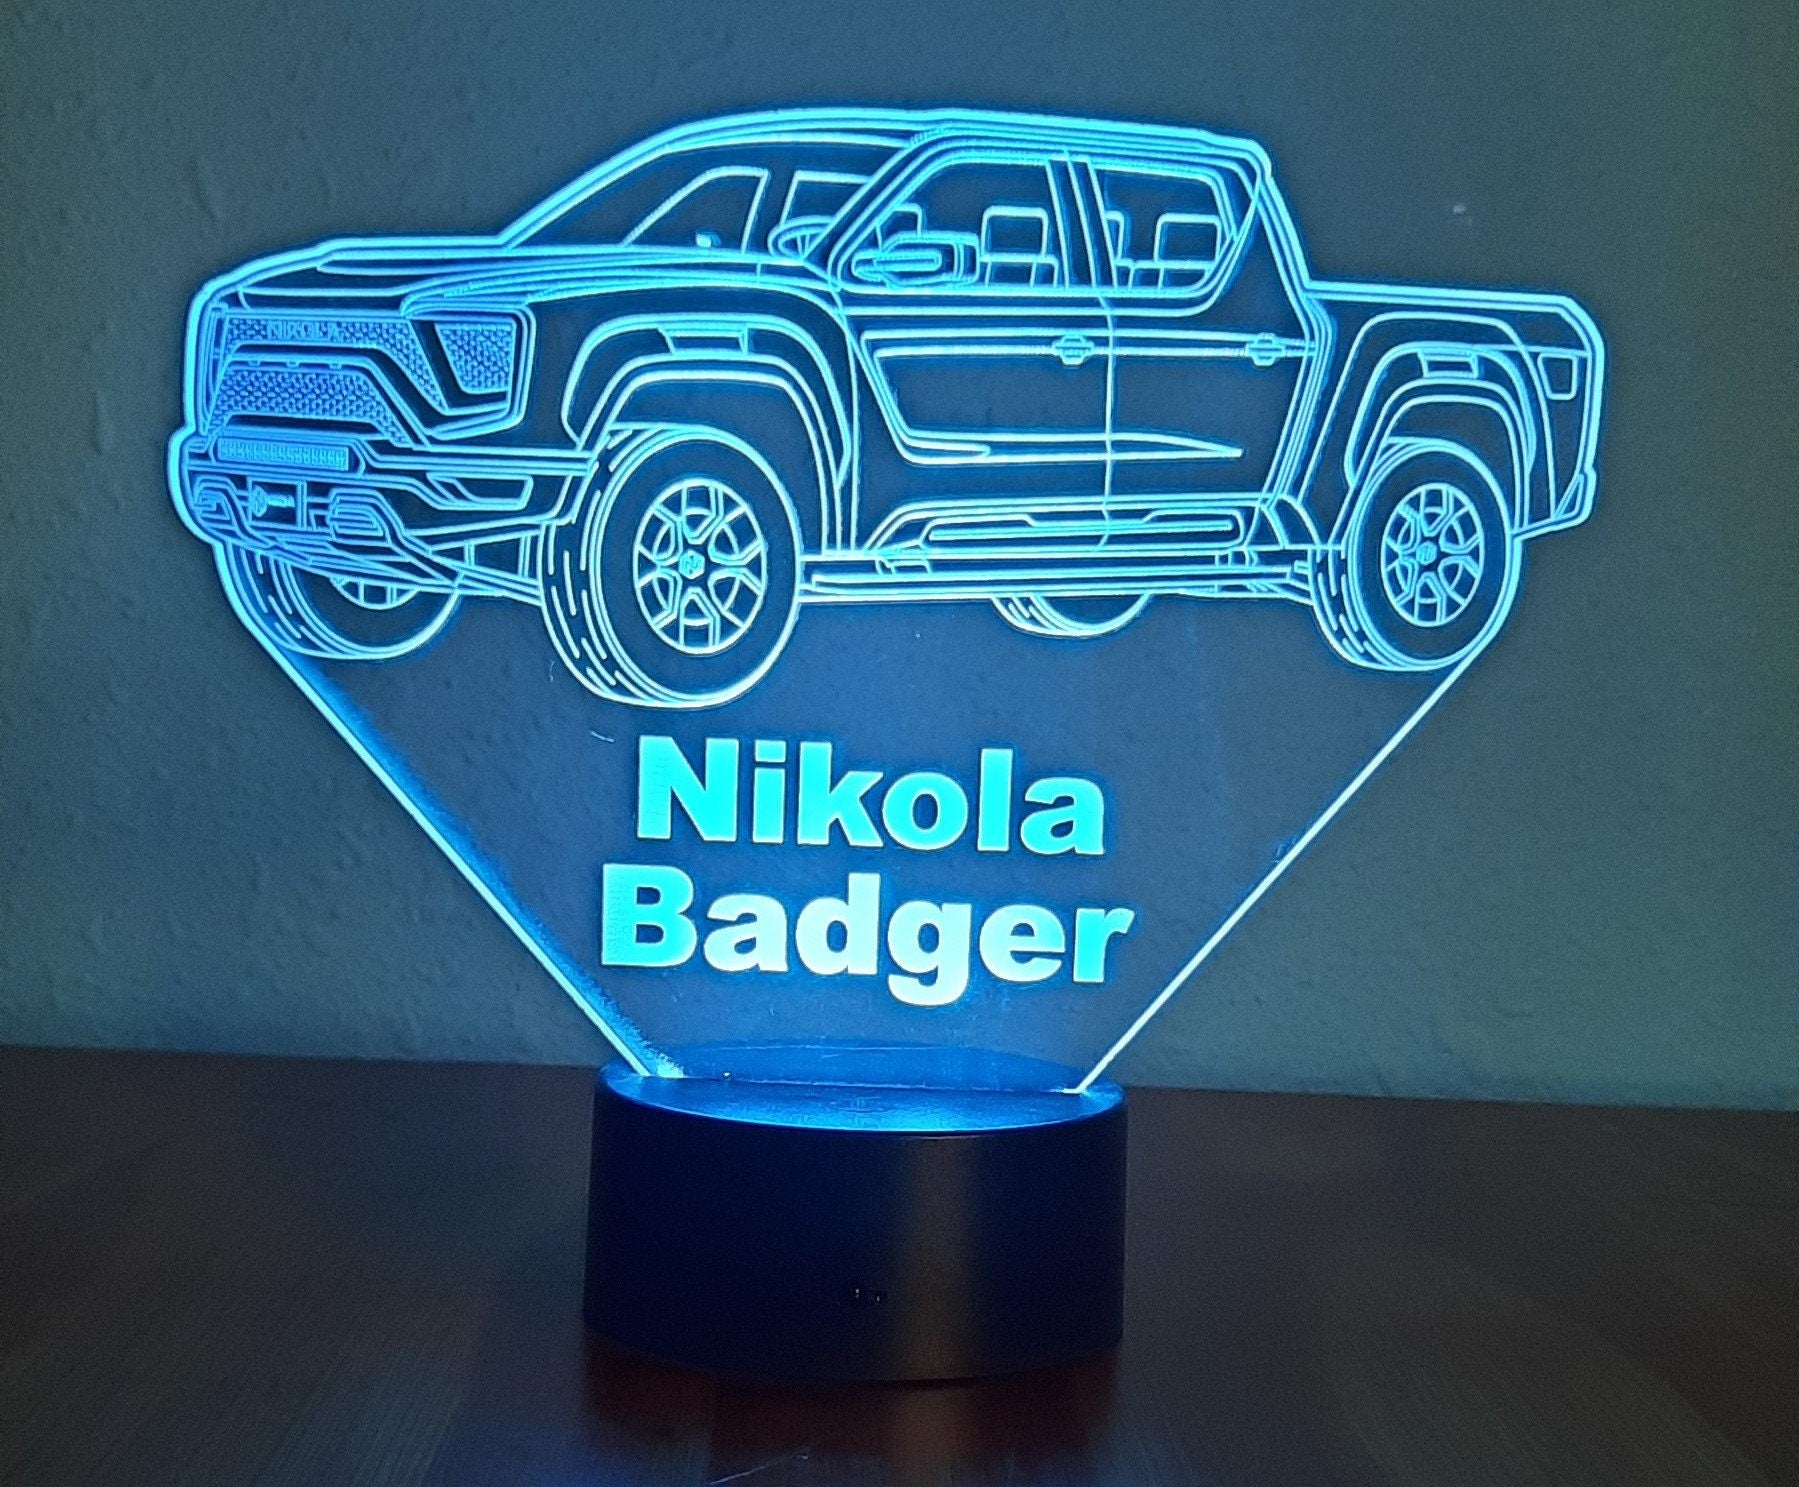 Awesome "Nikola Badger" 3D LED Lamp (1283) - FREE SHIPPING